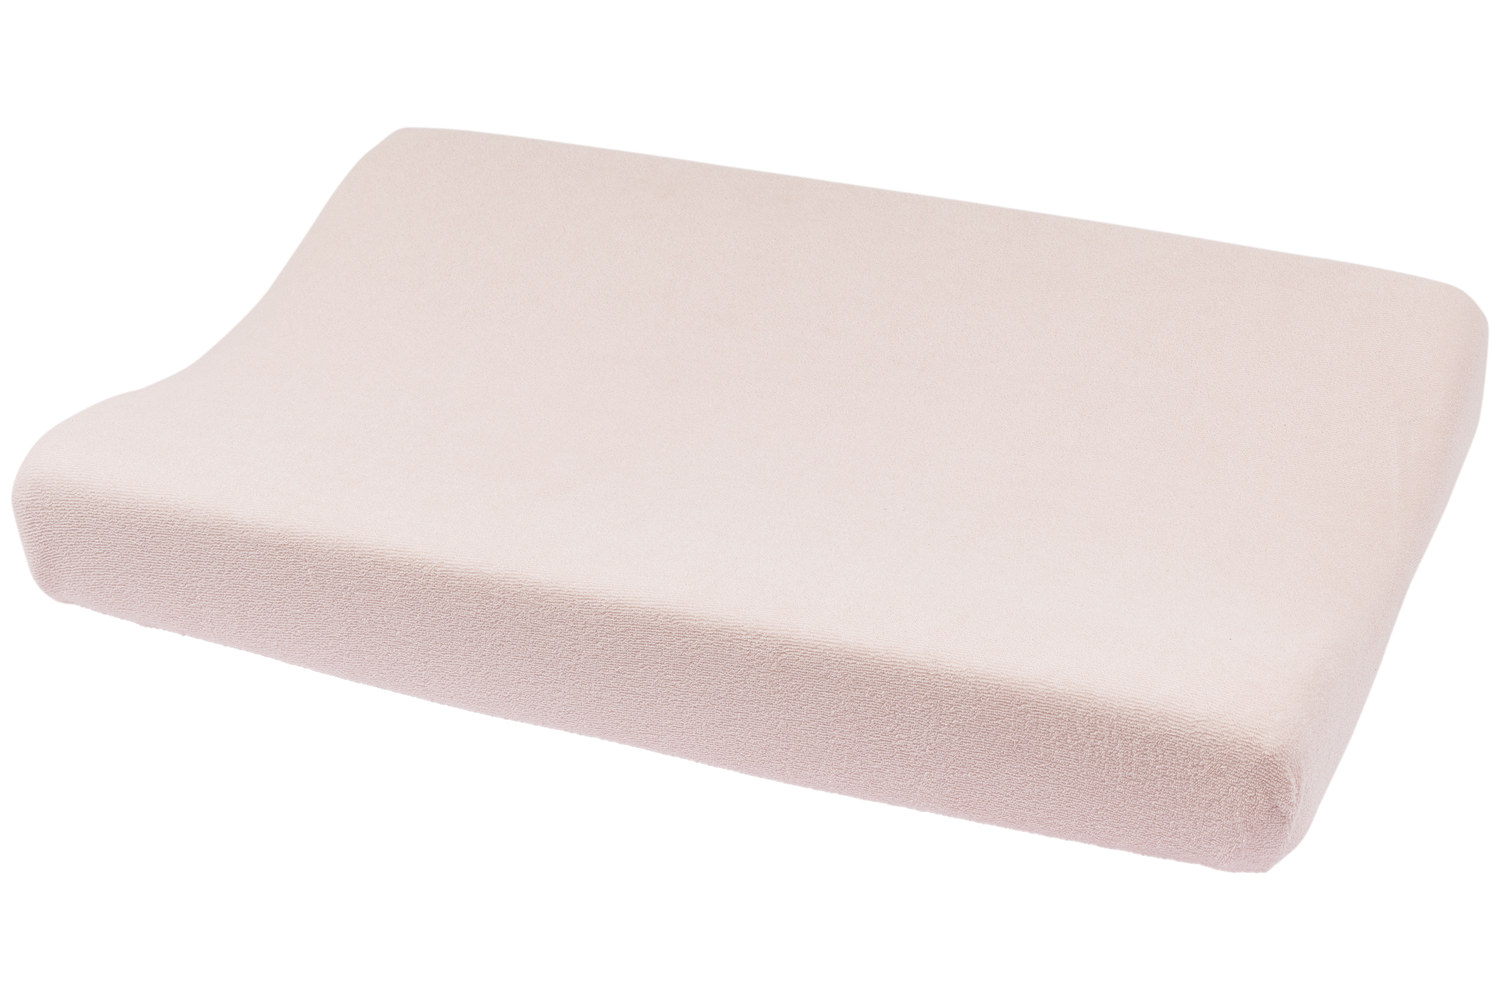 Aankleedkussenhoes badstof Uni - soft pink - 50x70cm